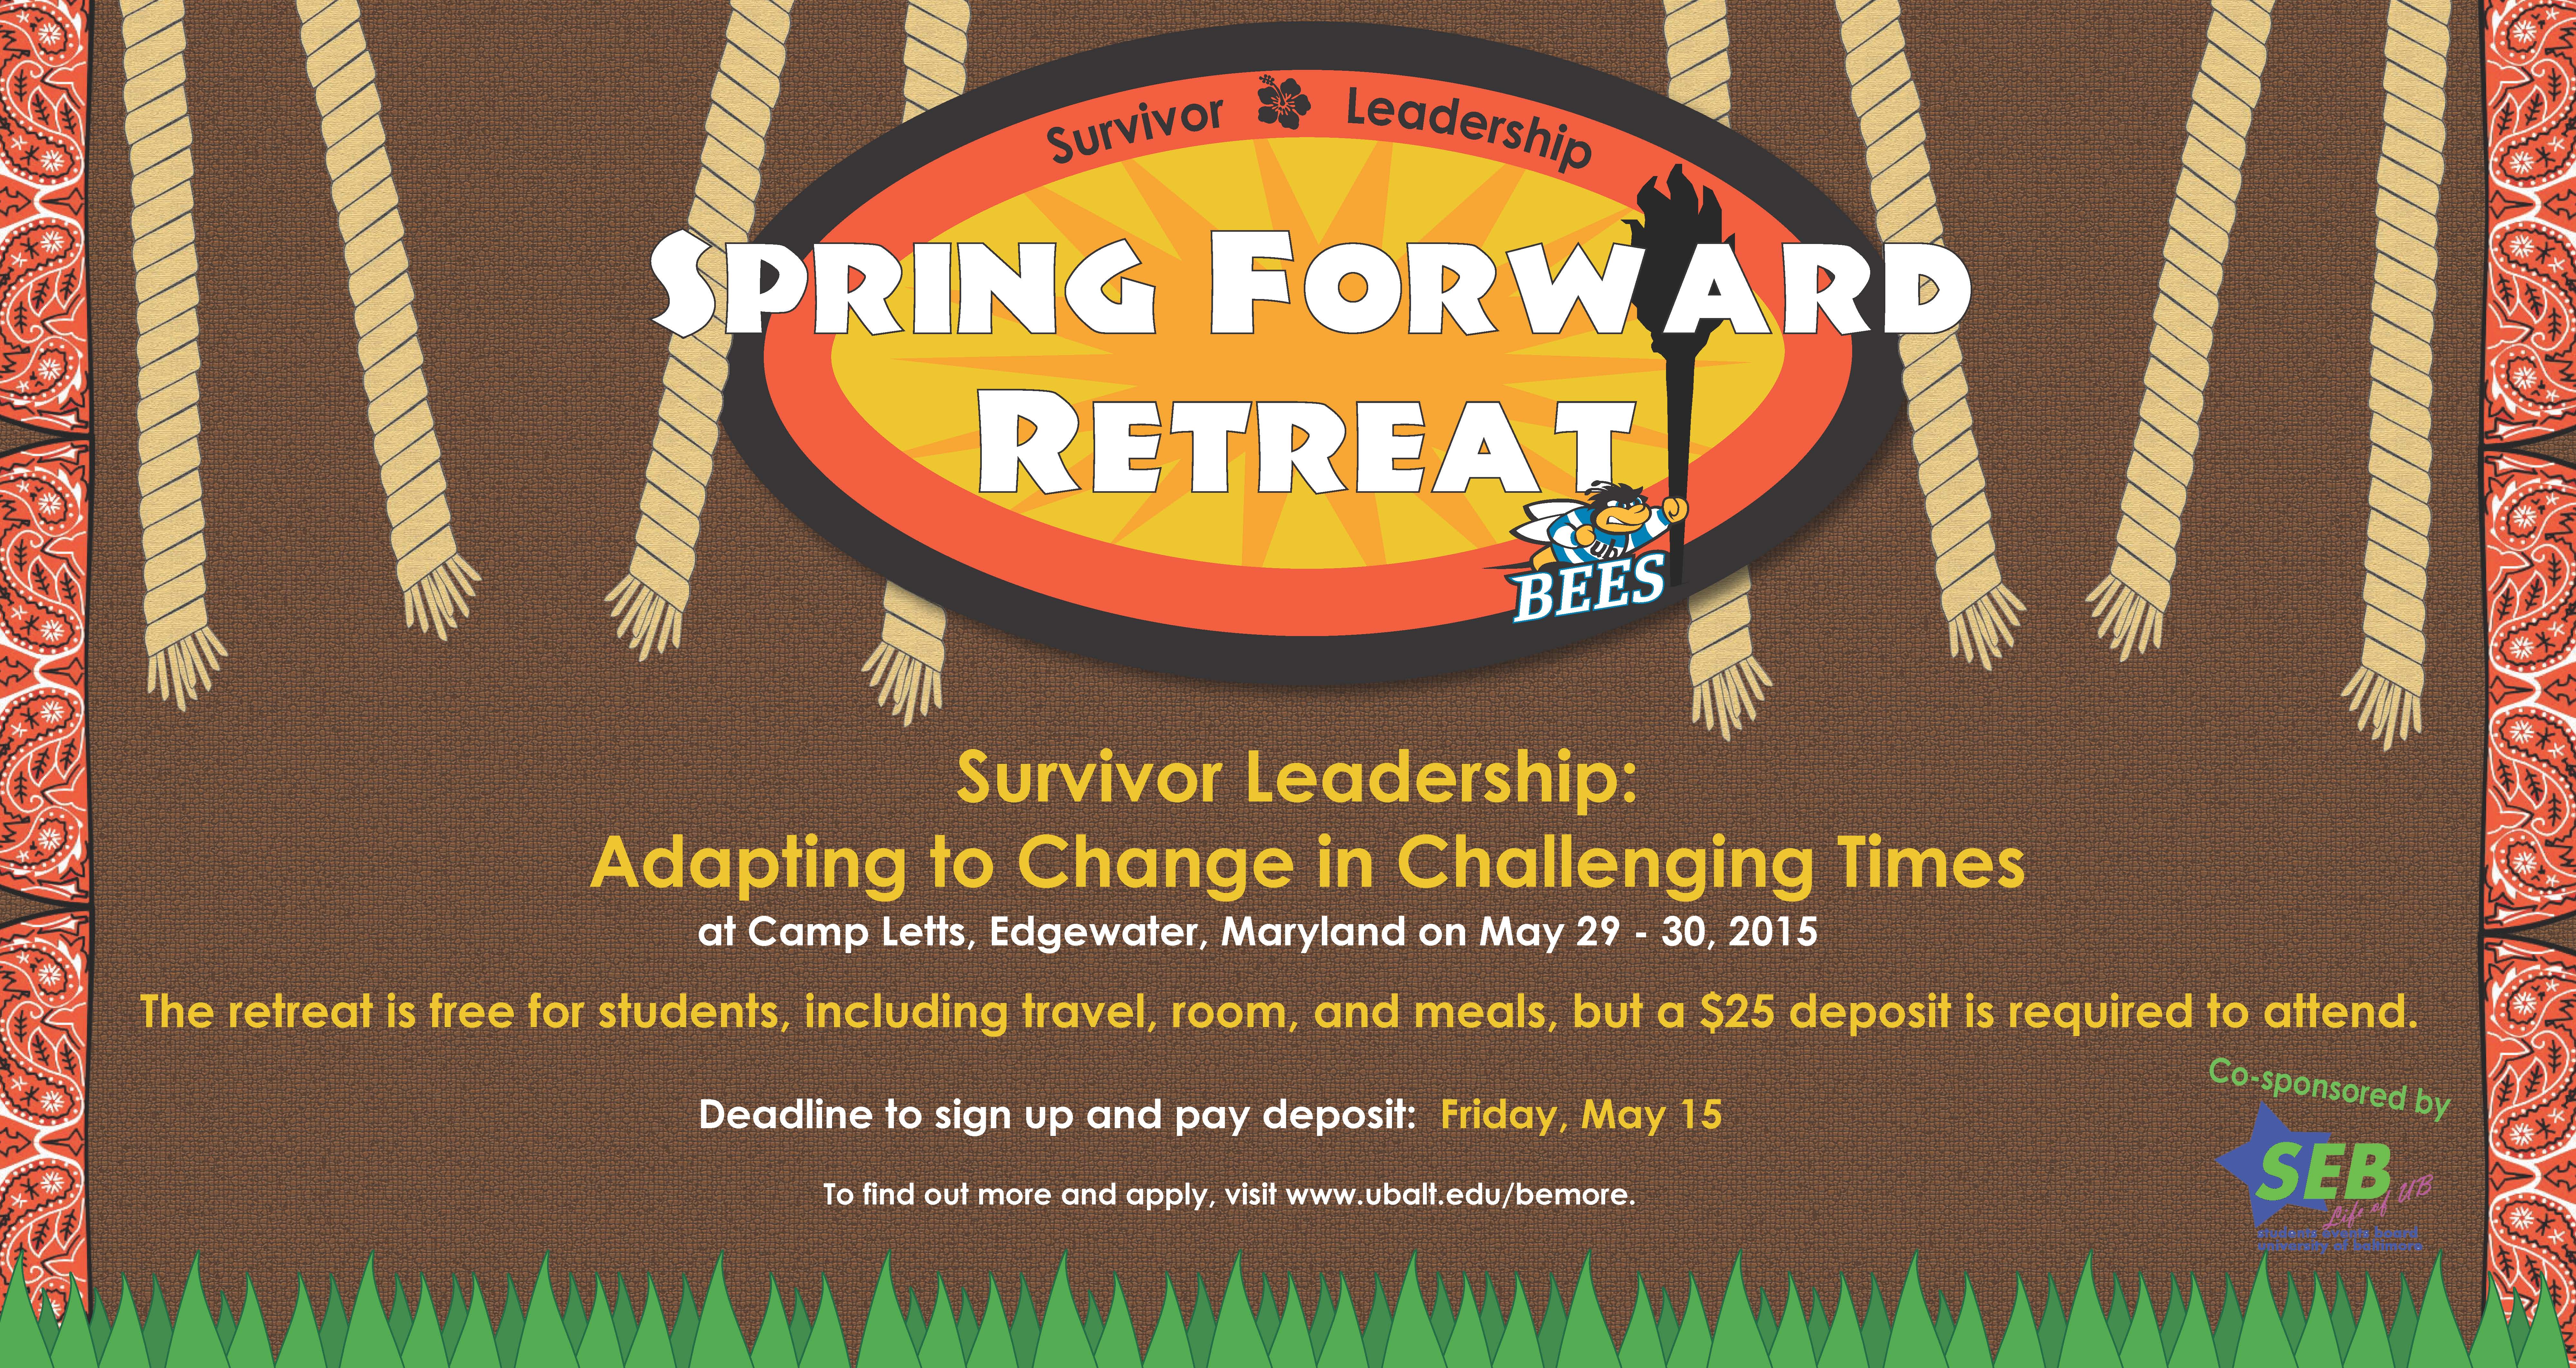 Spring Forward Retreat: Survivor Leadership